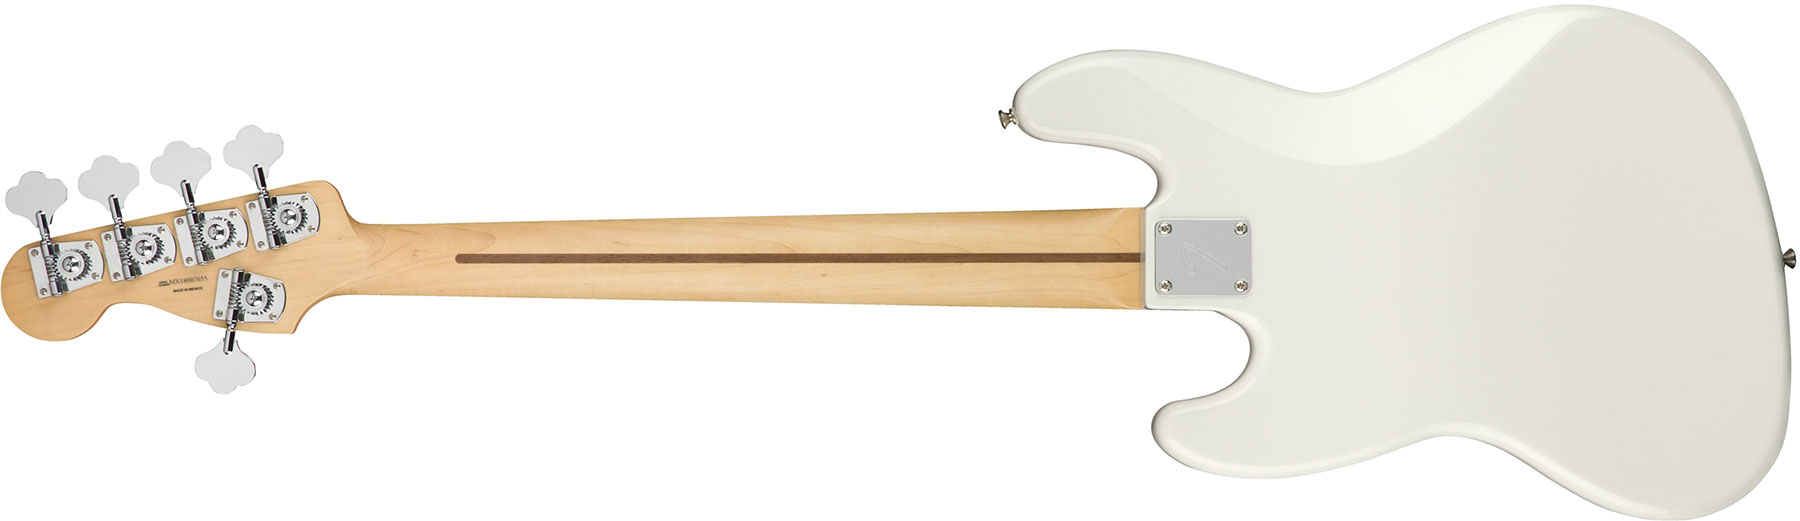 Fender Jazz Bass Player V 5-cordes Mex Pf - Polar White - Solid body elektrische bas - Variation 1